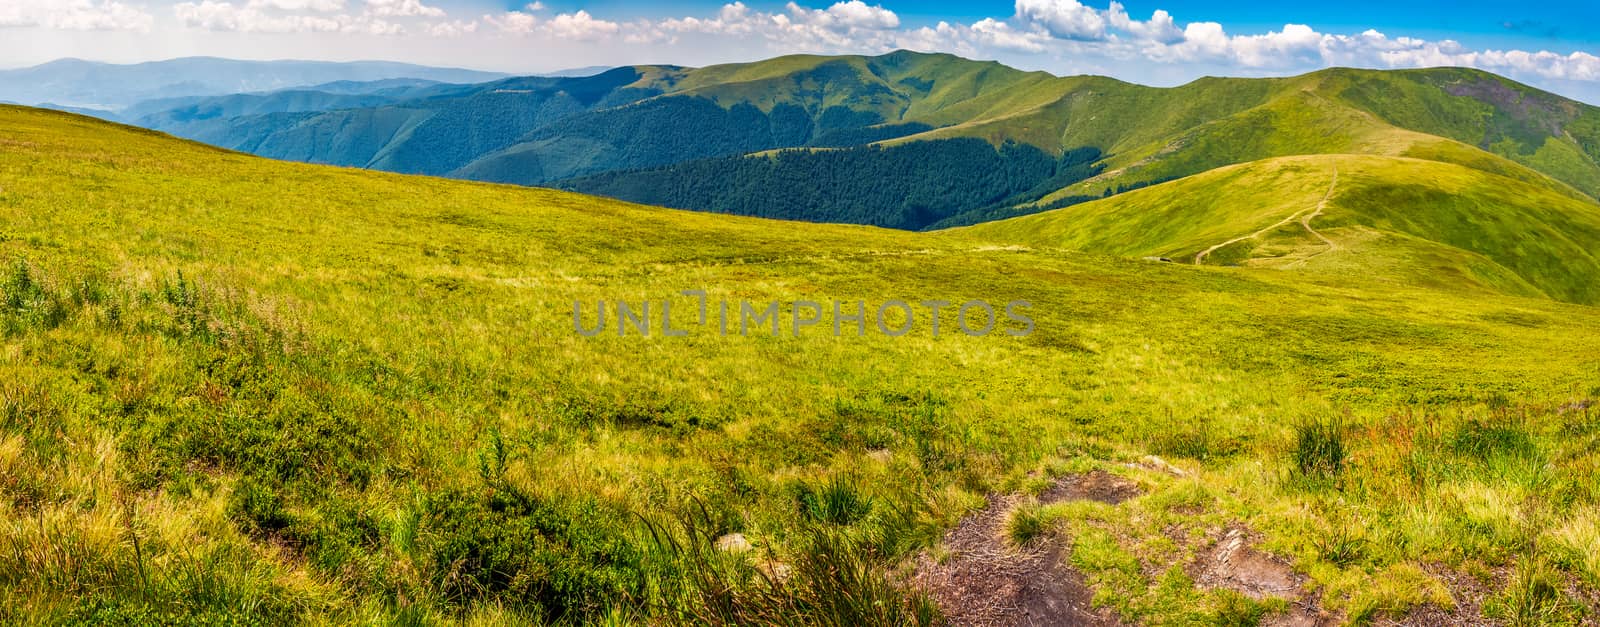 panorama of Carpathian mountain ridge by Pellinni